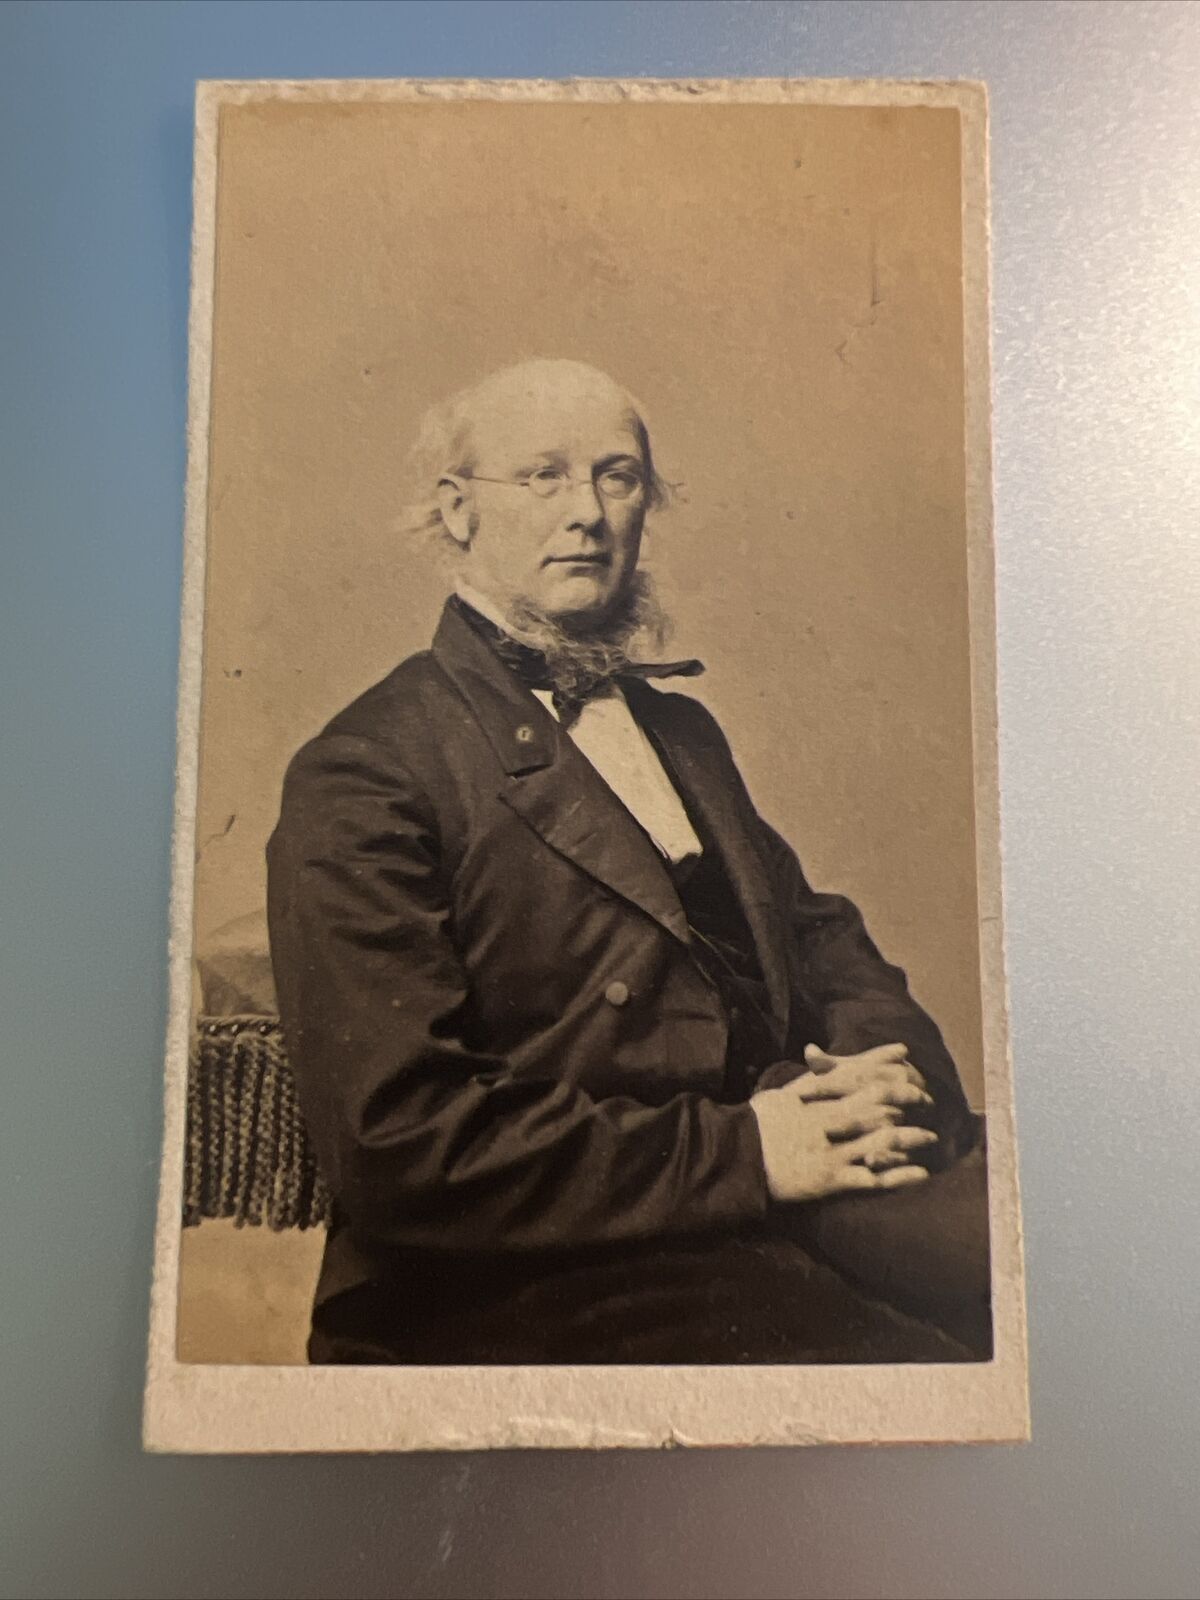 RARE ORIGINAL CDV OF HORACE GREELEY POLITICIAN & EDITOR ALBANY NEW YORK 1860ish